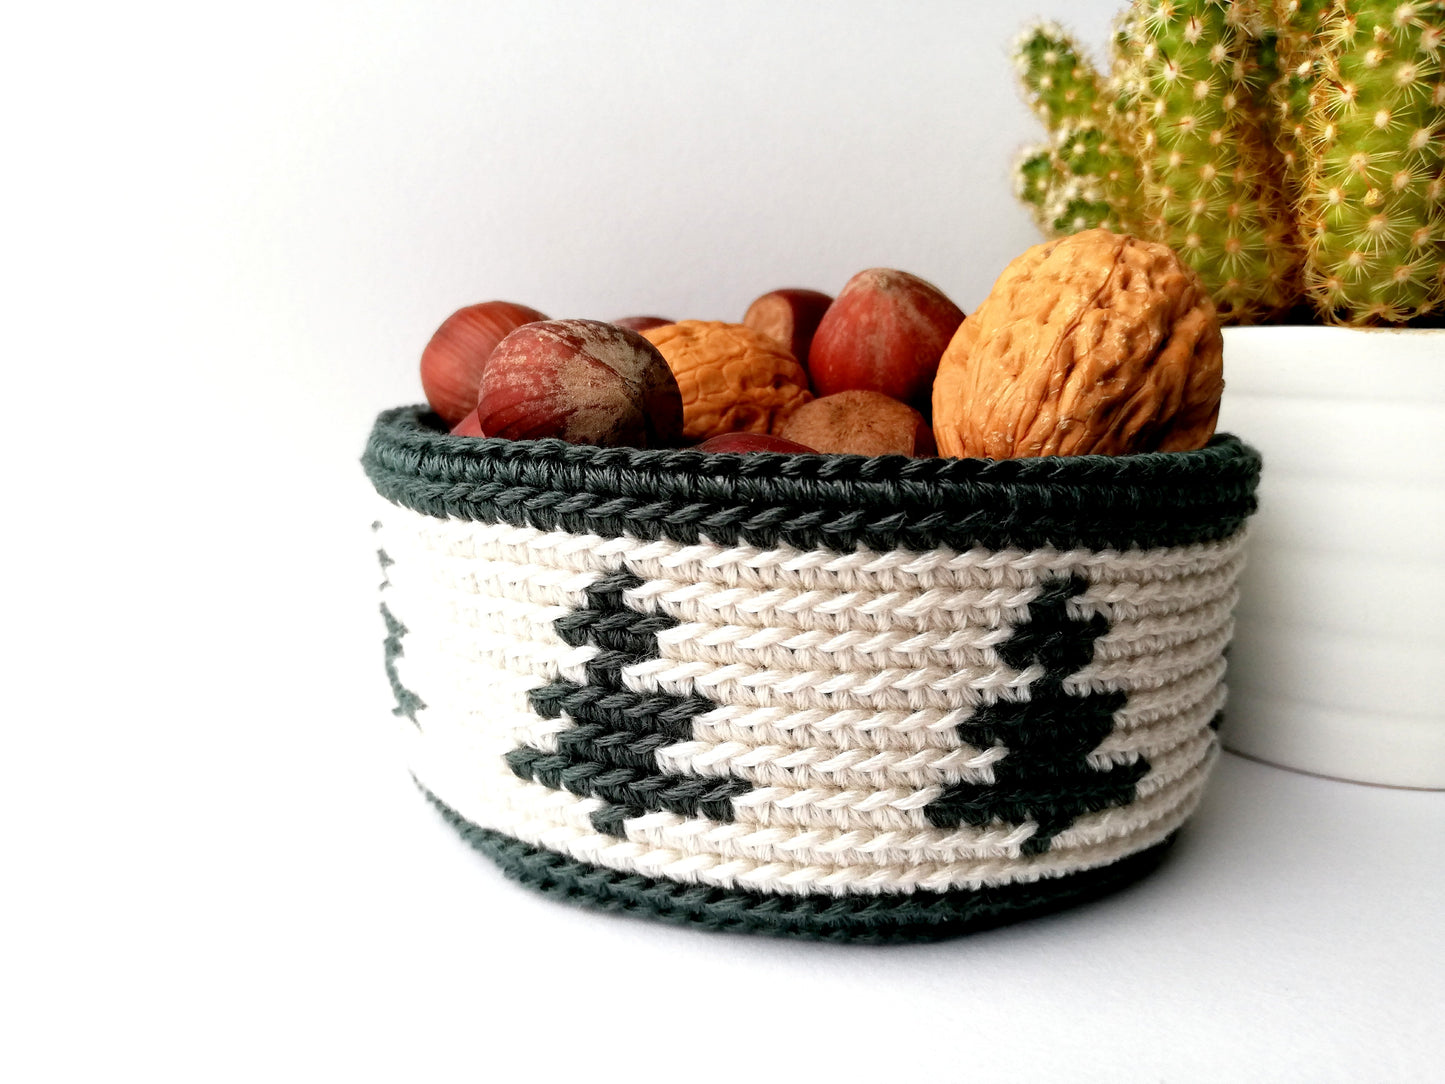 Crochet basket with Christmas trees